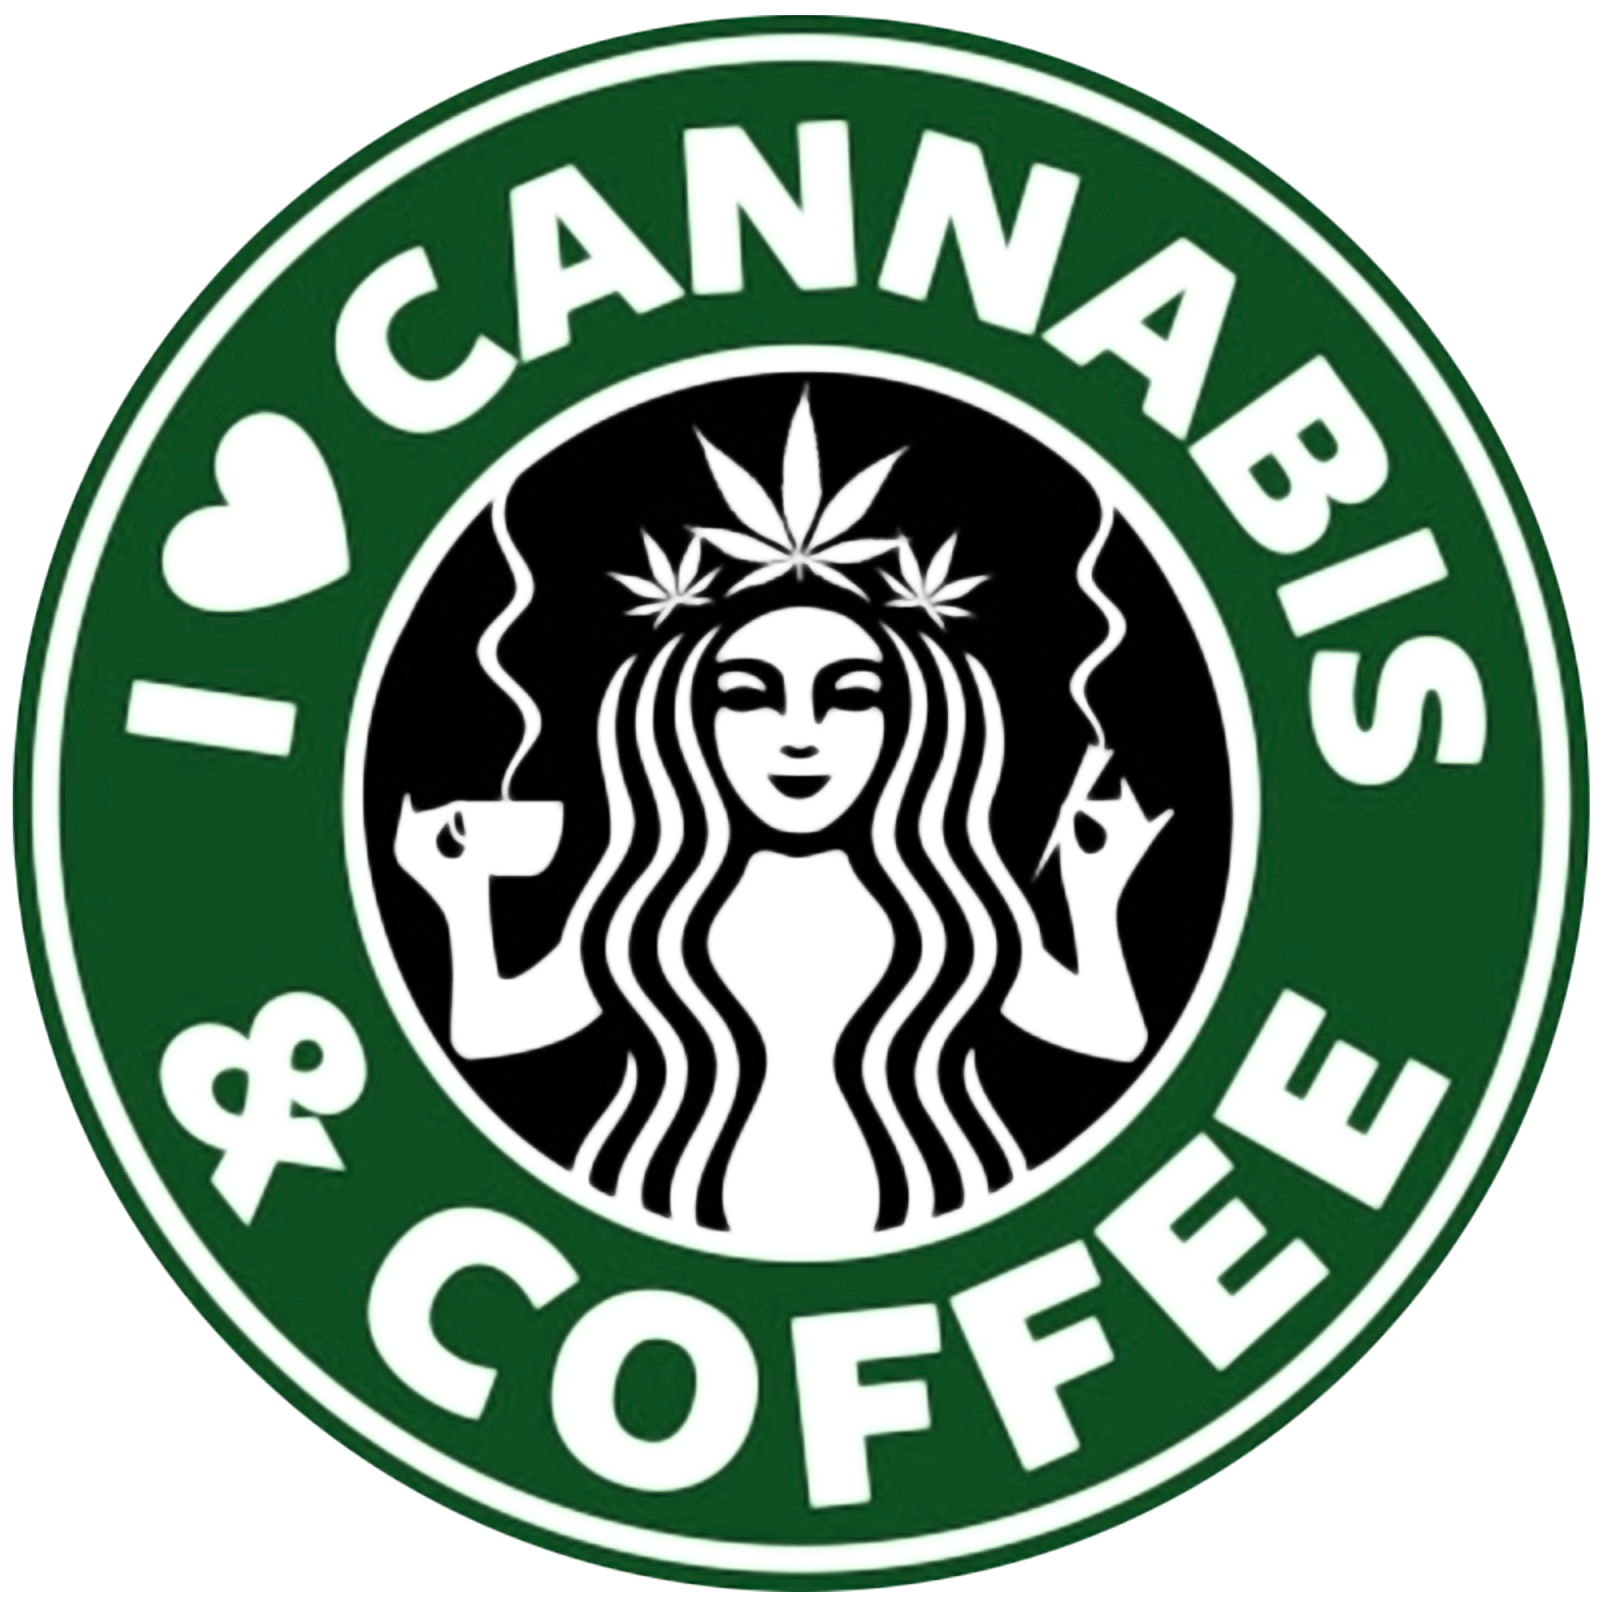 Homer Glen Coffee Starbucks Logo Cafe PNG Image